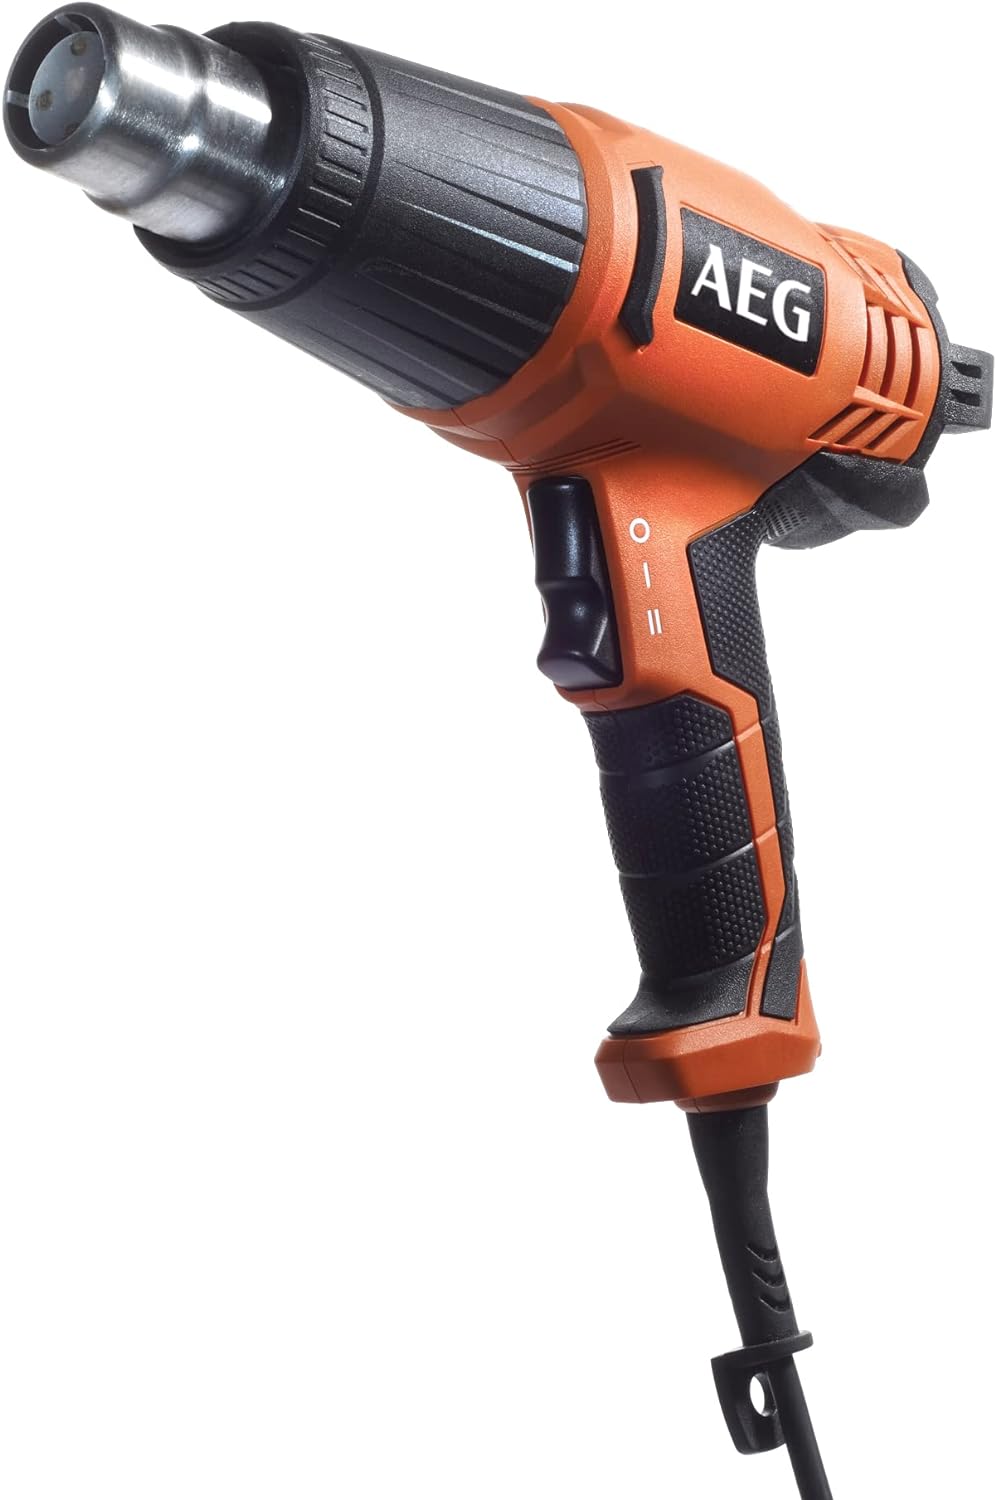 AEG Heat Gun 1500W 300° / 560° - HG560D | Supply Master Accra, Ghana Heat Gun Buy Tools hardware Building materials